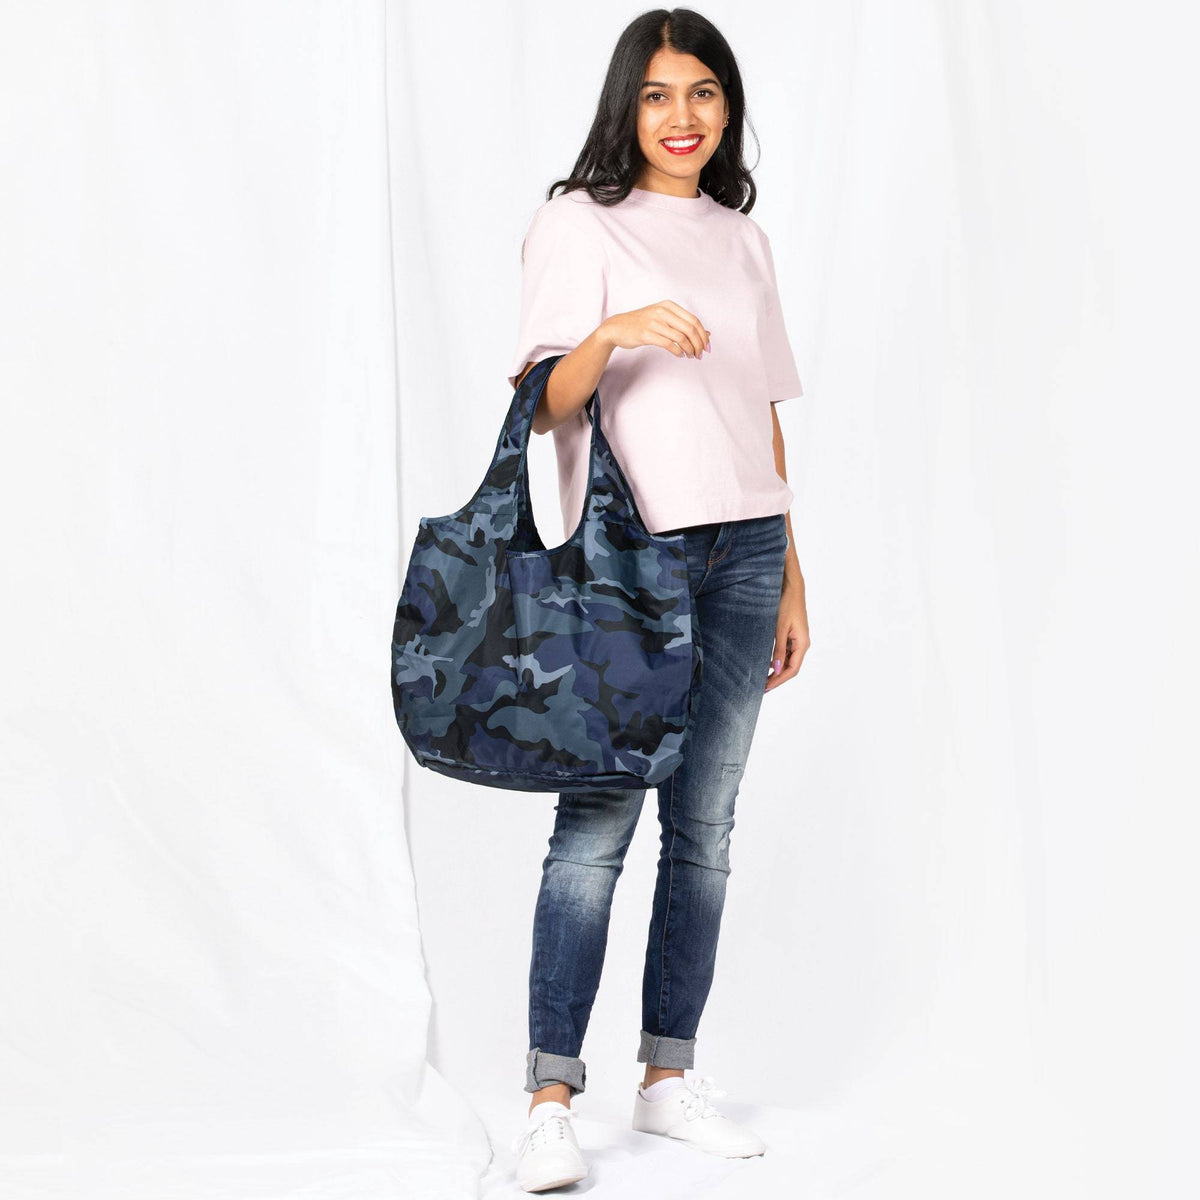 My Other Bag Is Chanel Eco Bag / Tote Bag